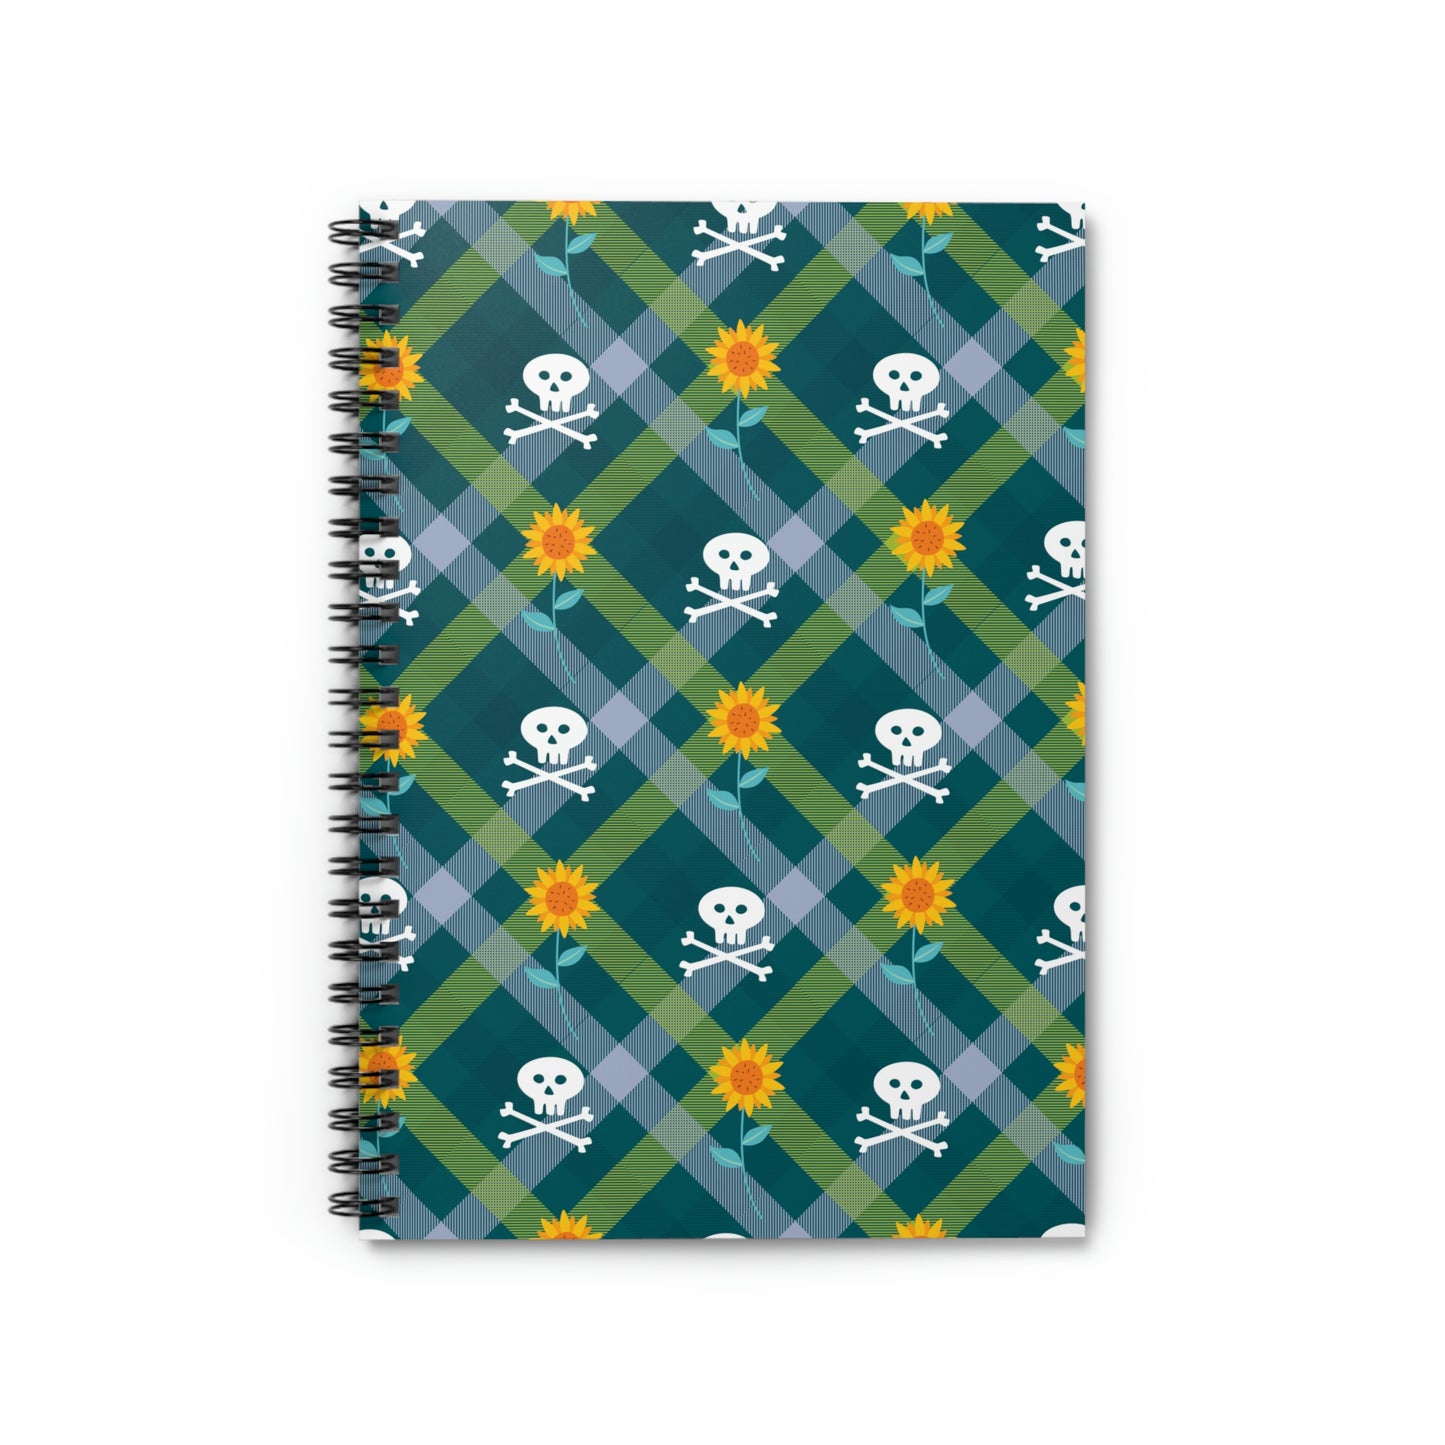 True Crime Plaid Spiral Notebook in Pirates & Lumberjacks